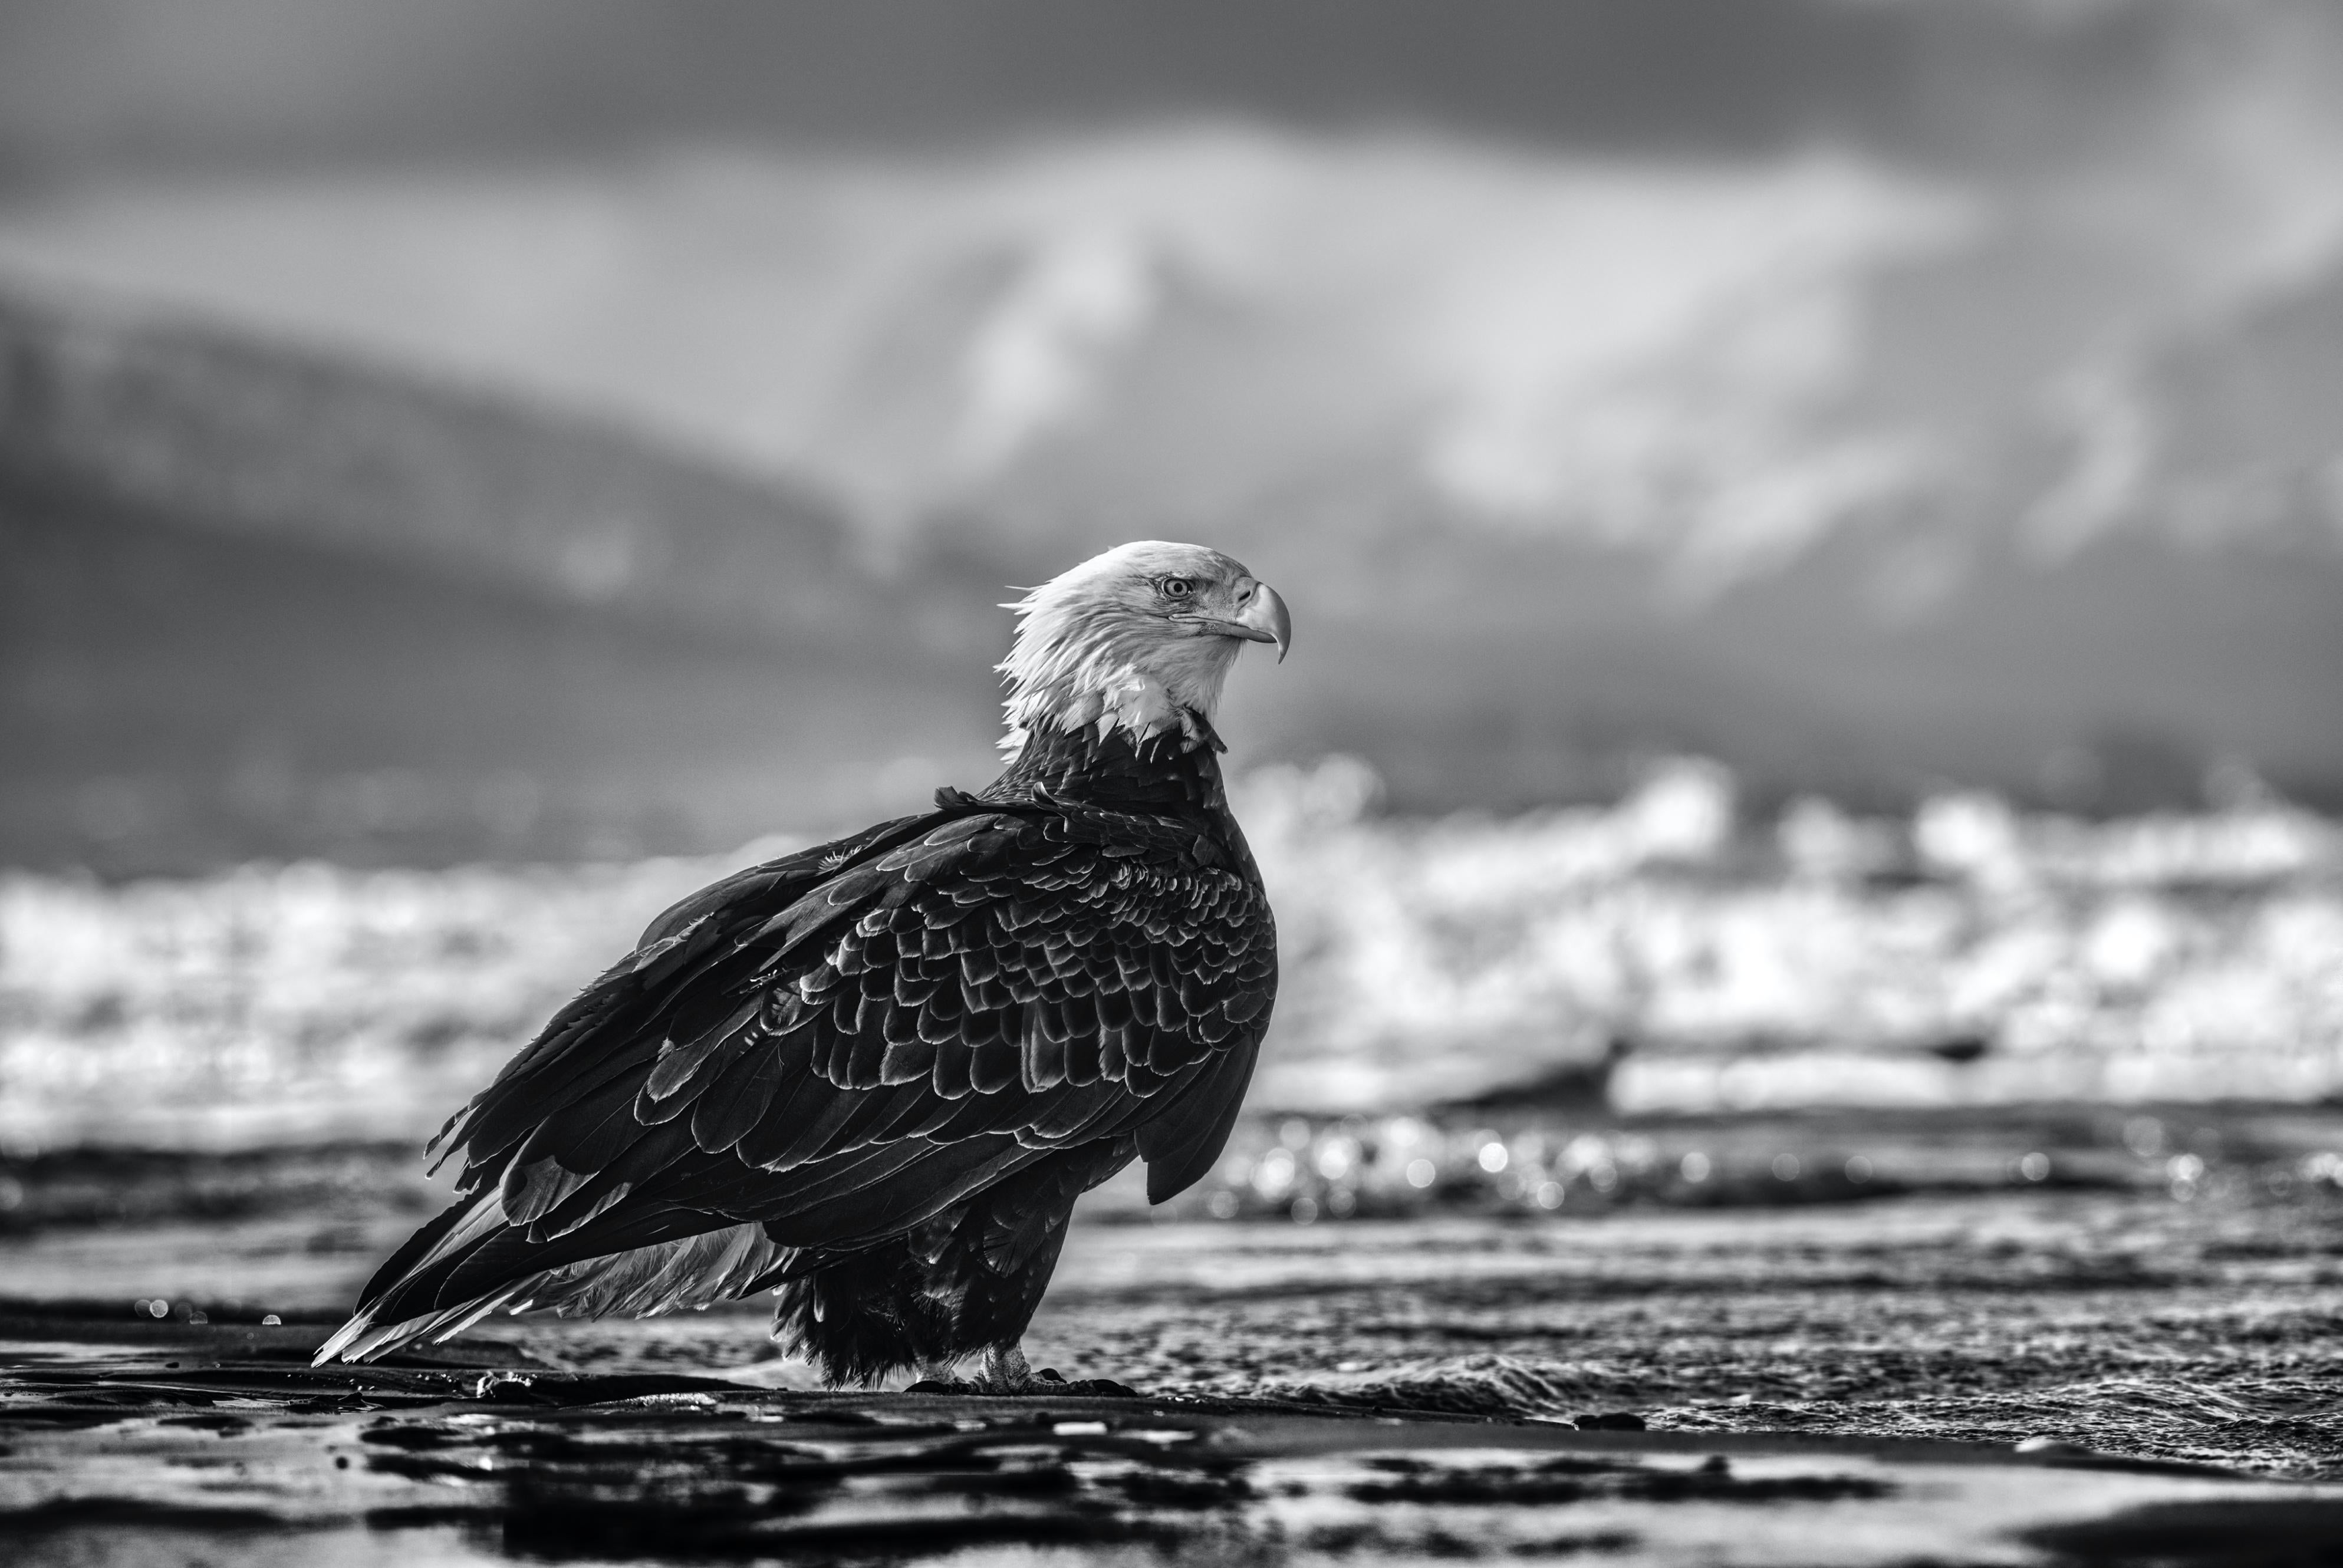 The Bird On The Beach by David Yarrow - Contemporary Photography